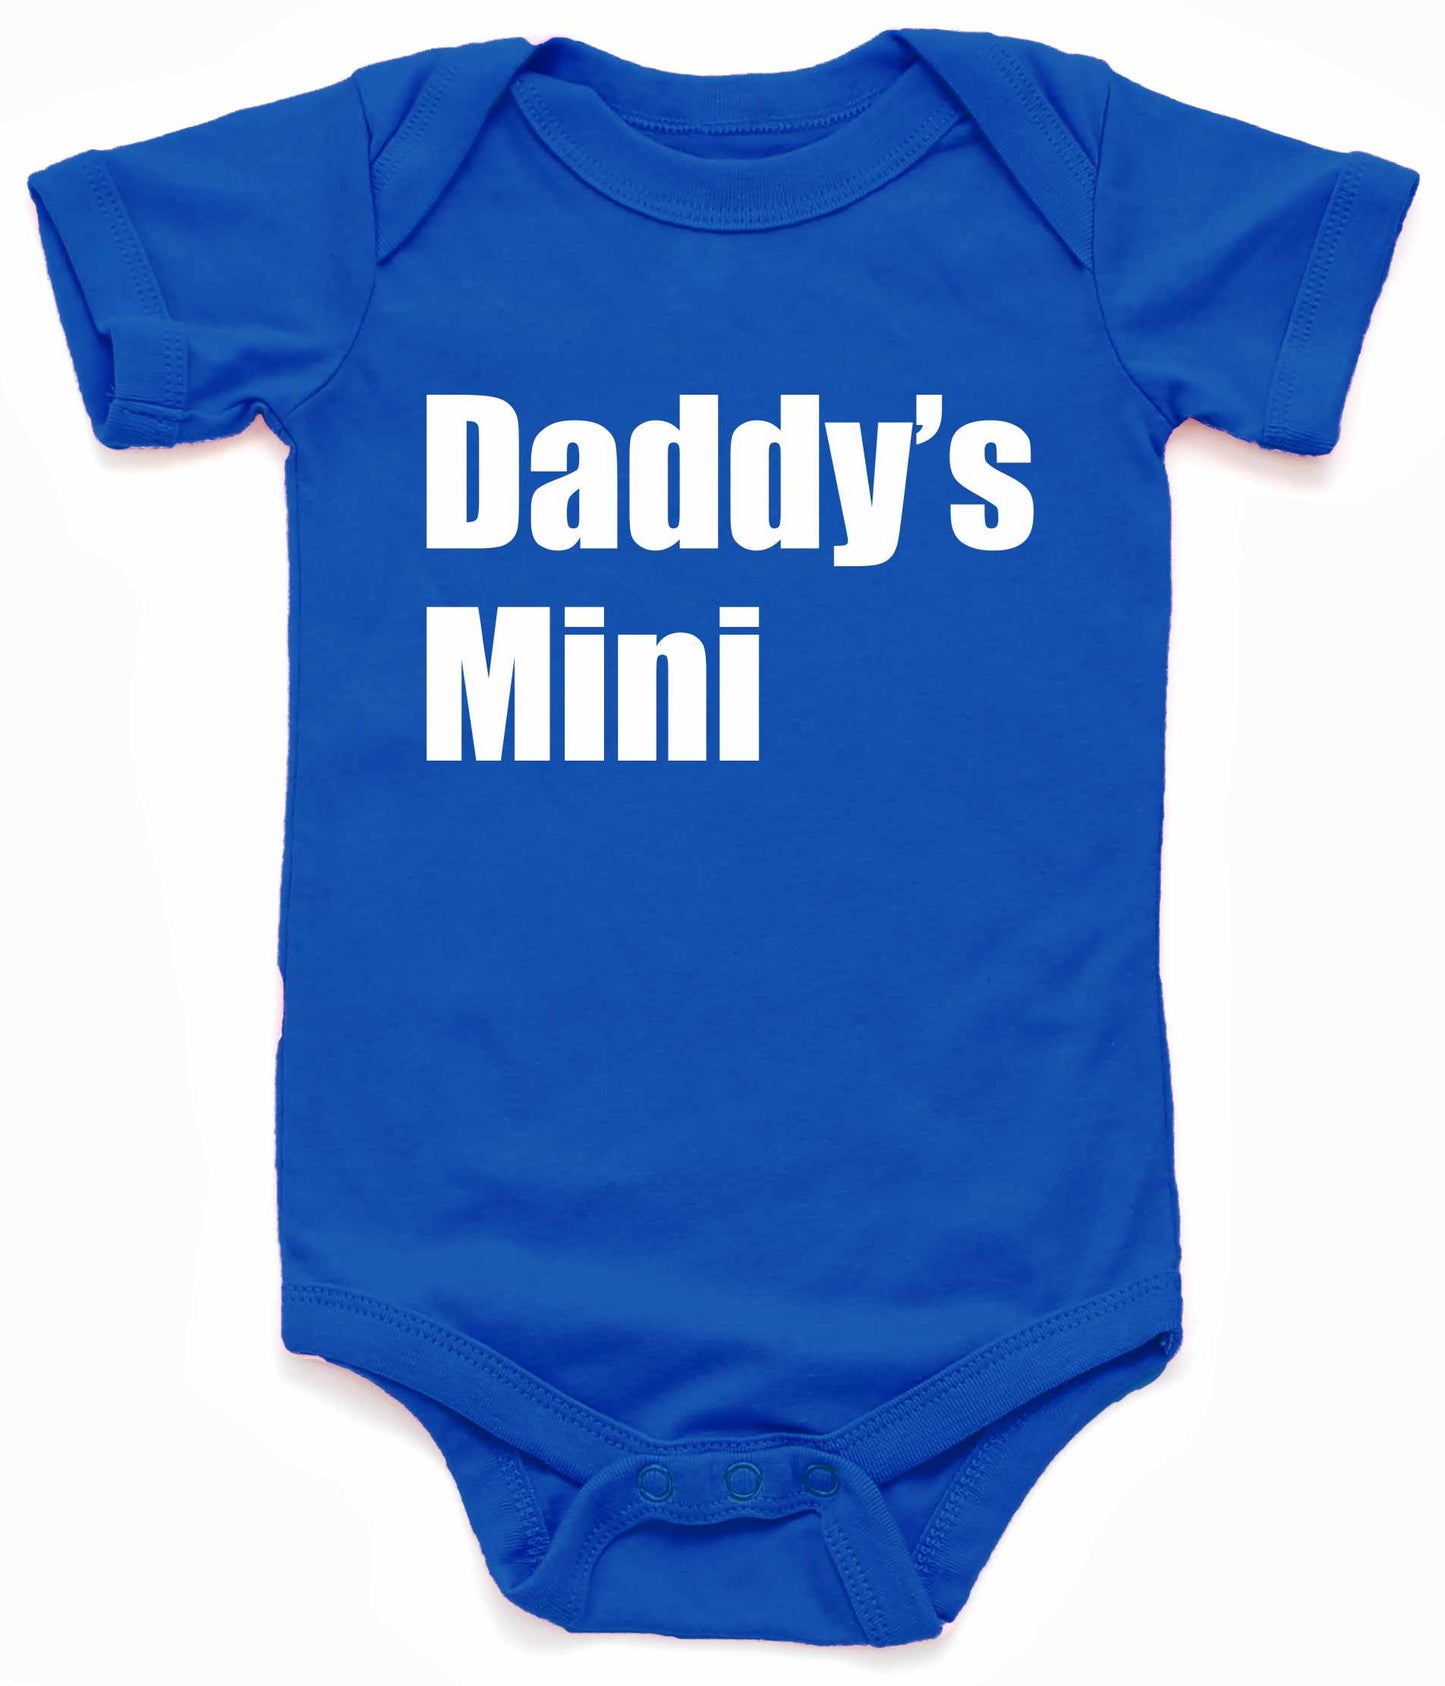 Daddy's Mini Infant BodySuit - Royal Blue / NewBorn - Royal Blue / 6 Month - Royal Blue / 12 Month - Royal Blue / 18 Month - Royal Blue / 24 Month